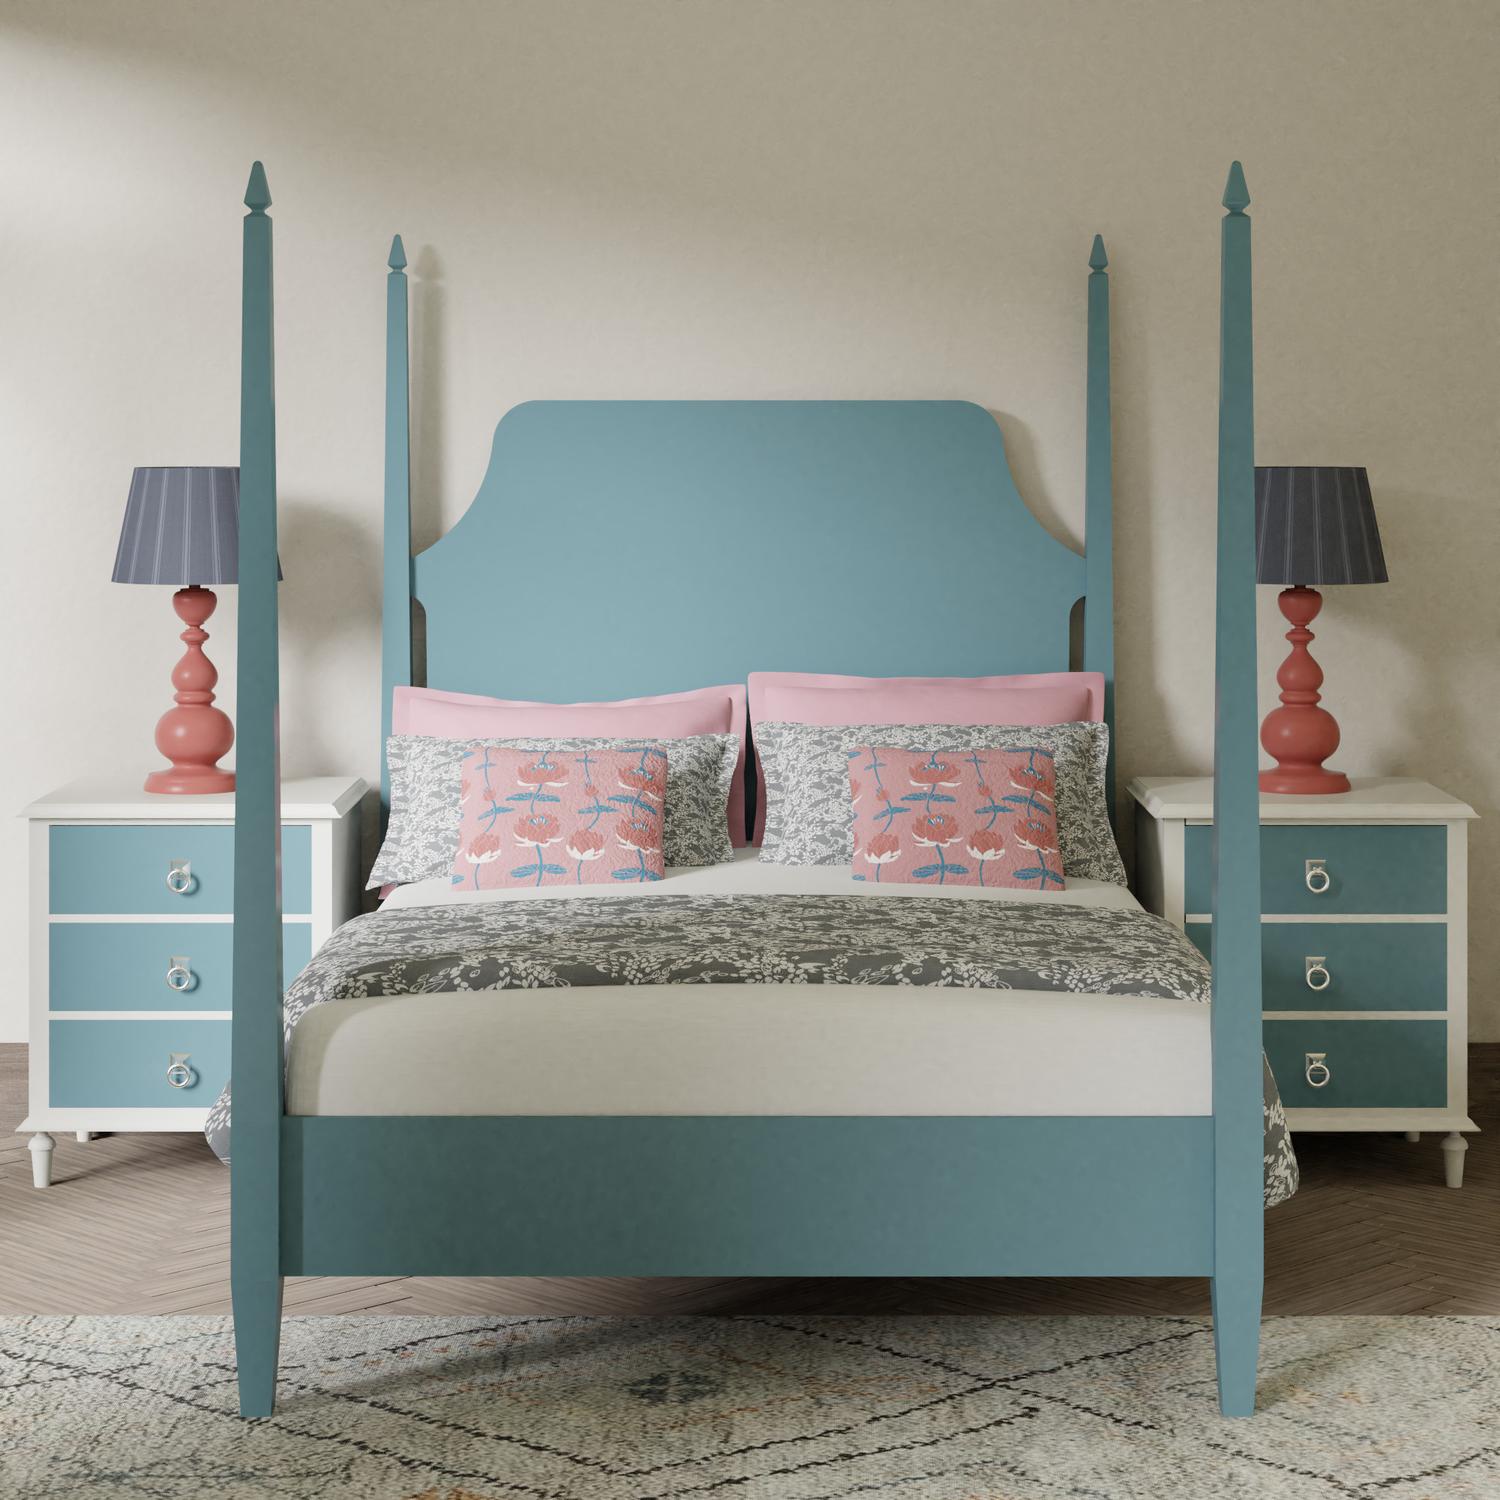 Turner wooden bed - Image blue and pink bedroom